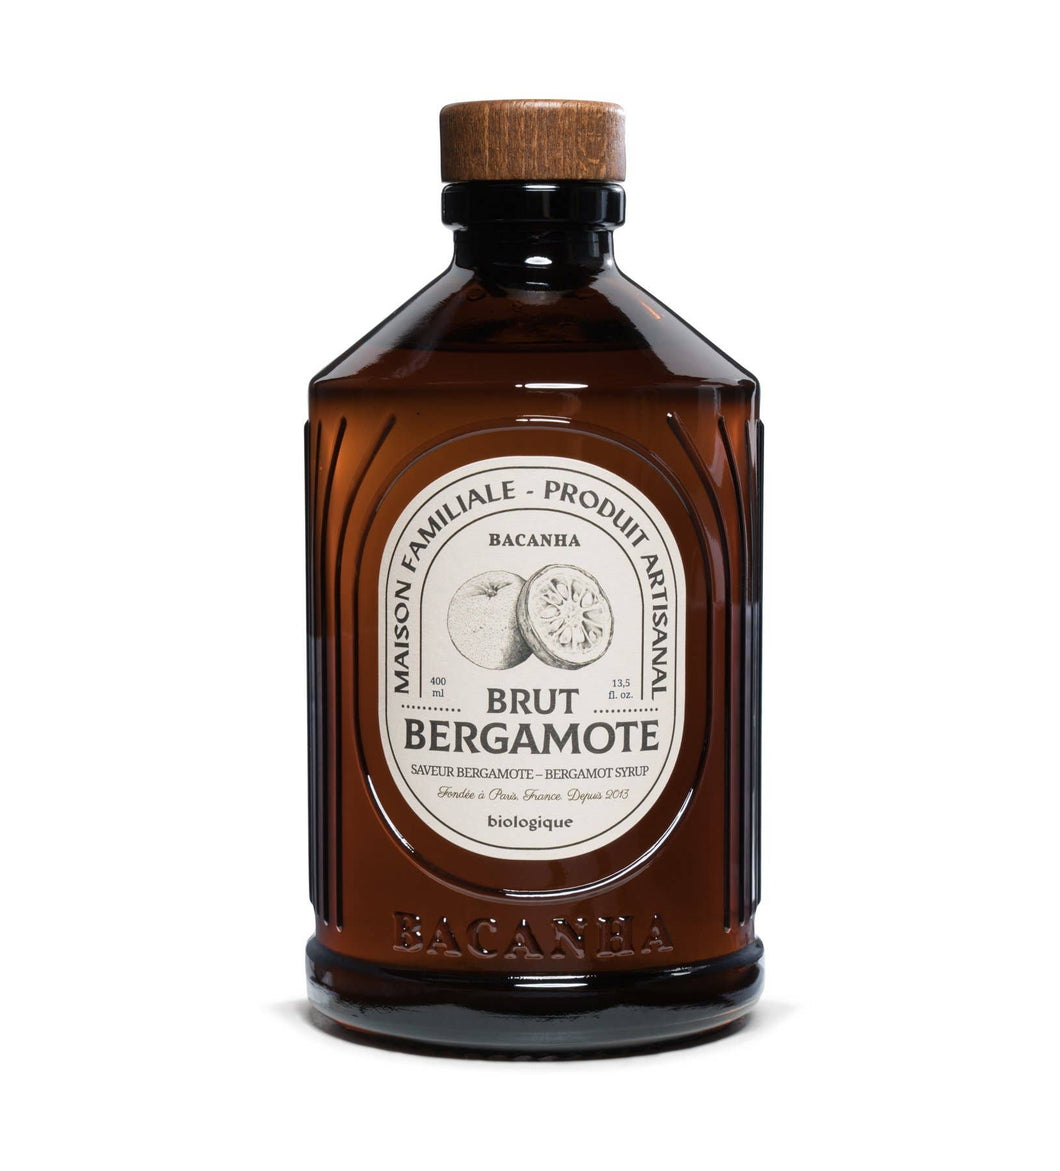 Bacanha - Sirop Bergamote Brut - Biologique - 400ml